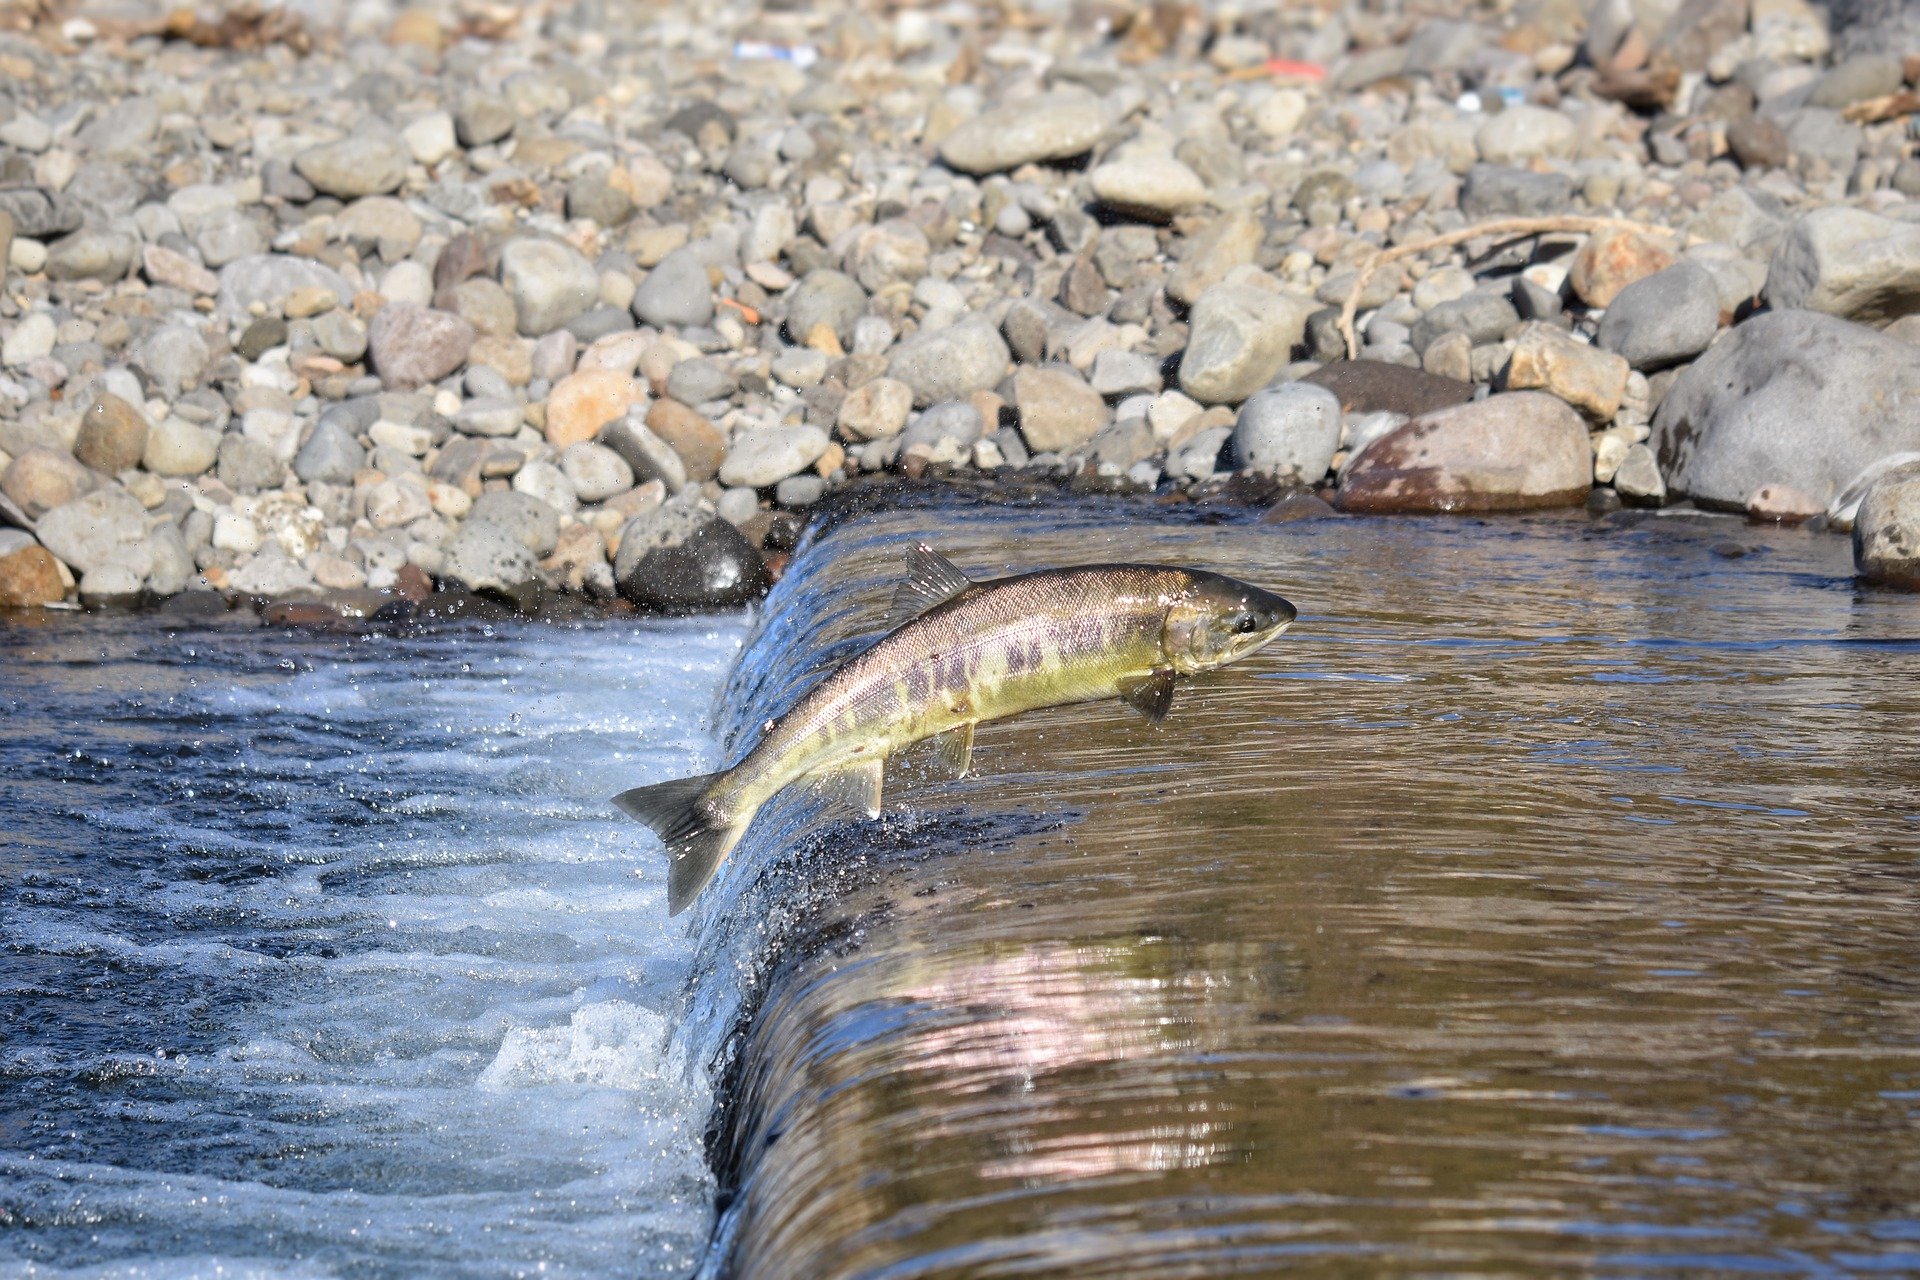 Capilares Cancelar Elaborar Alerta ecologista: “El salmón atlántico, en peligro de extinción en España”